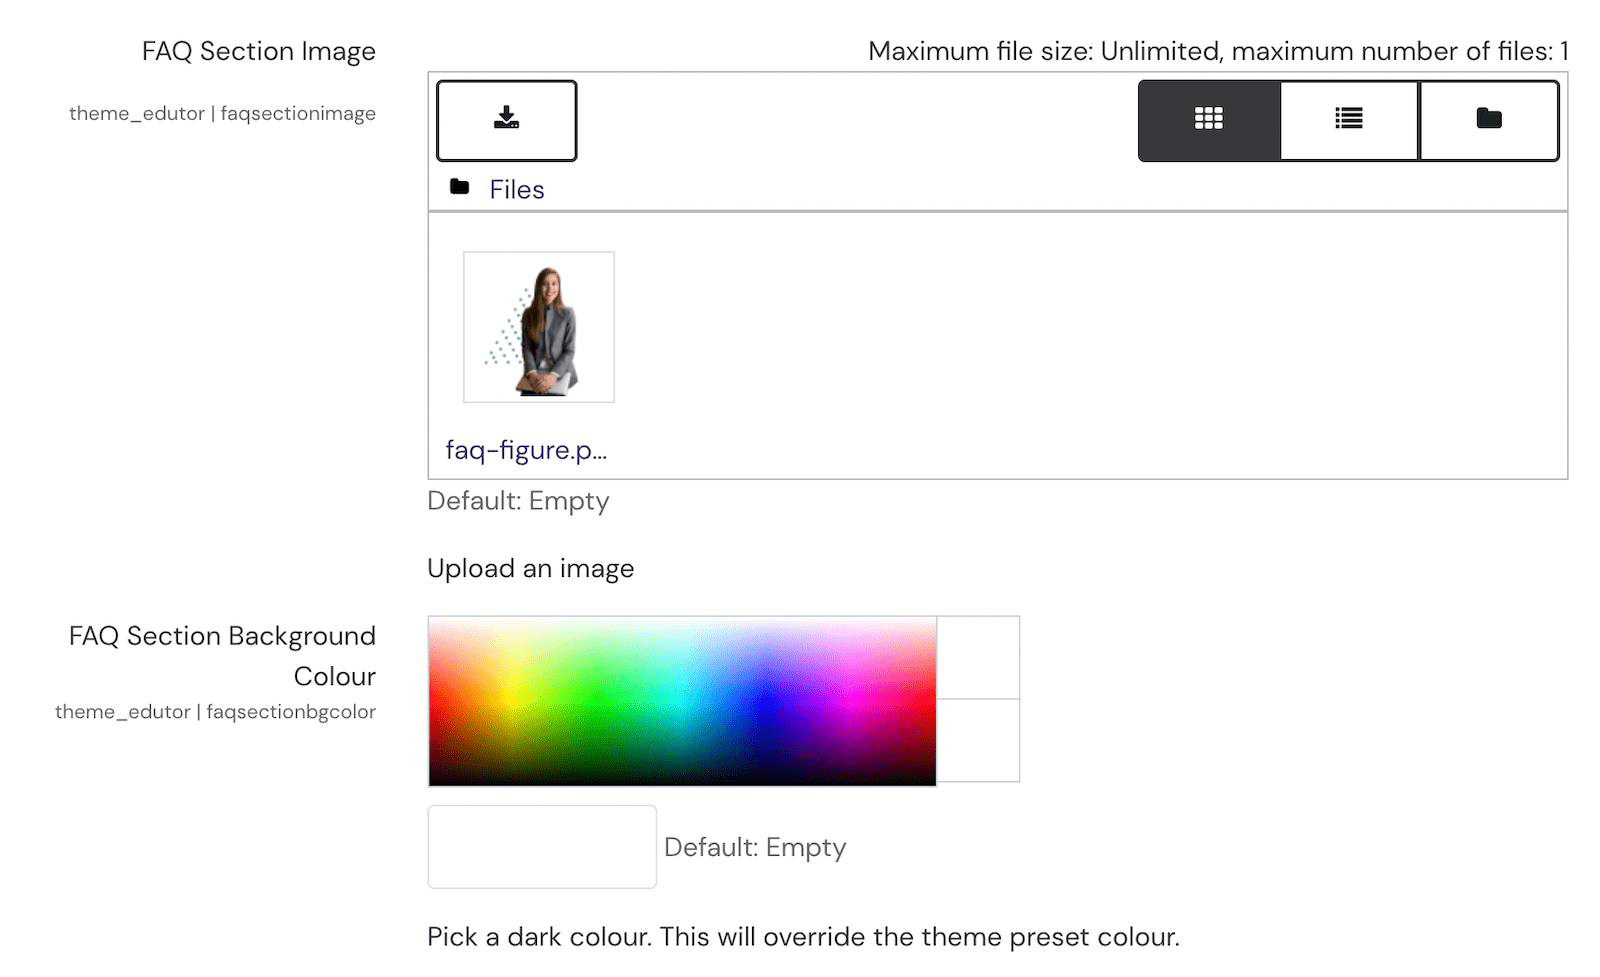 moodle-theme-edutor-faq-section-settings-change-color-upload-image